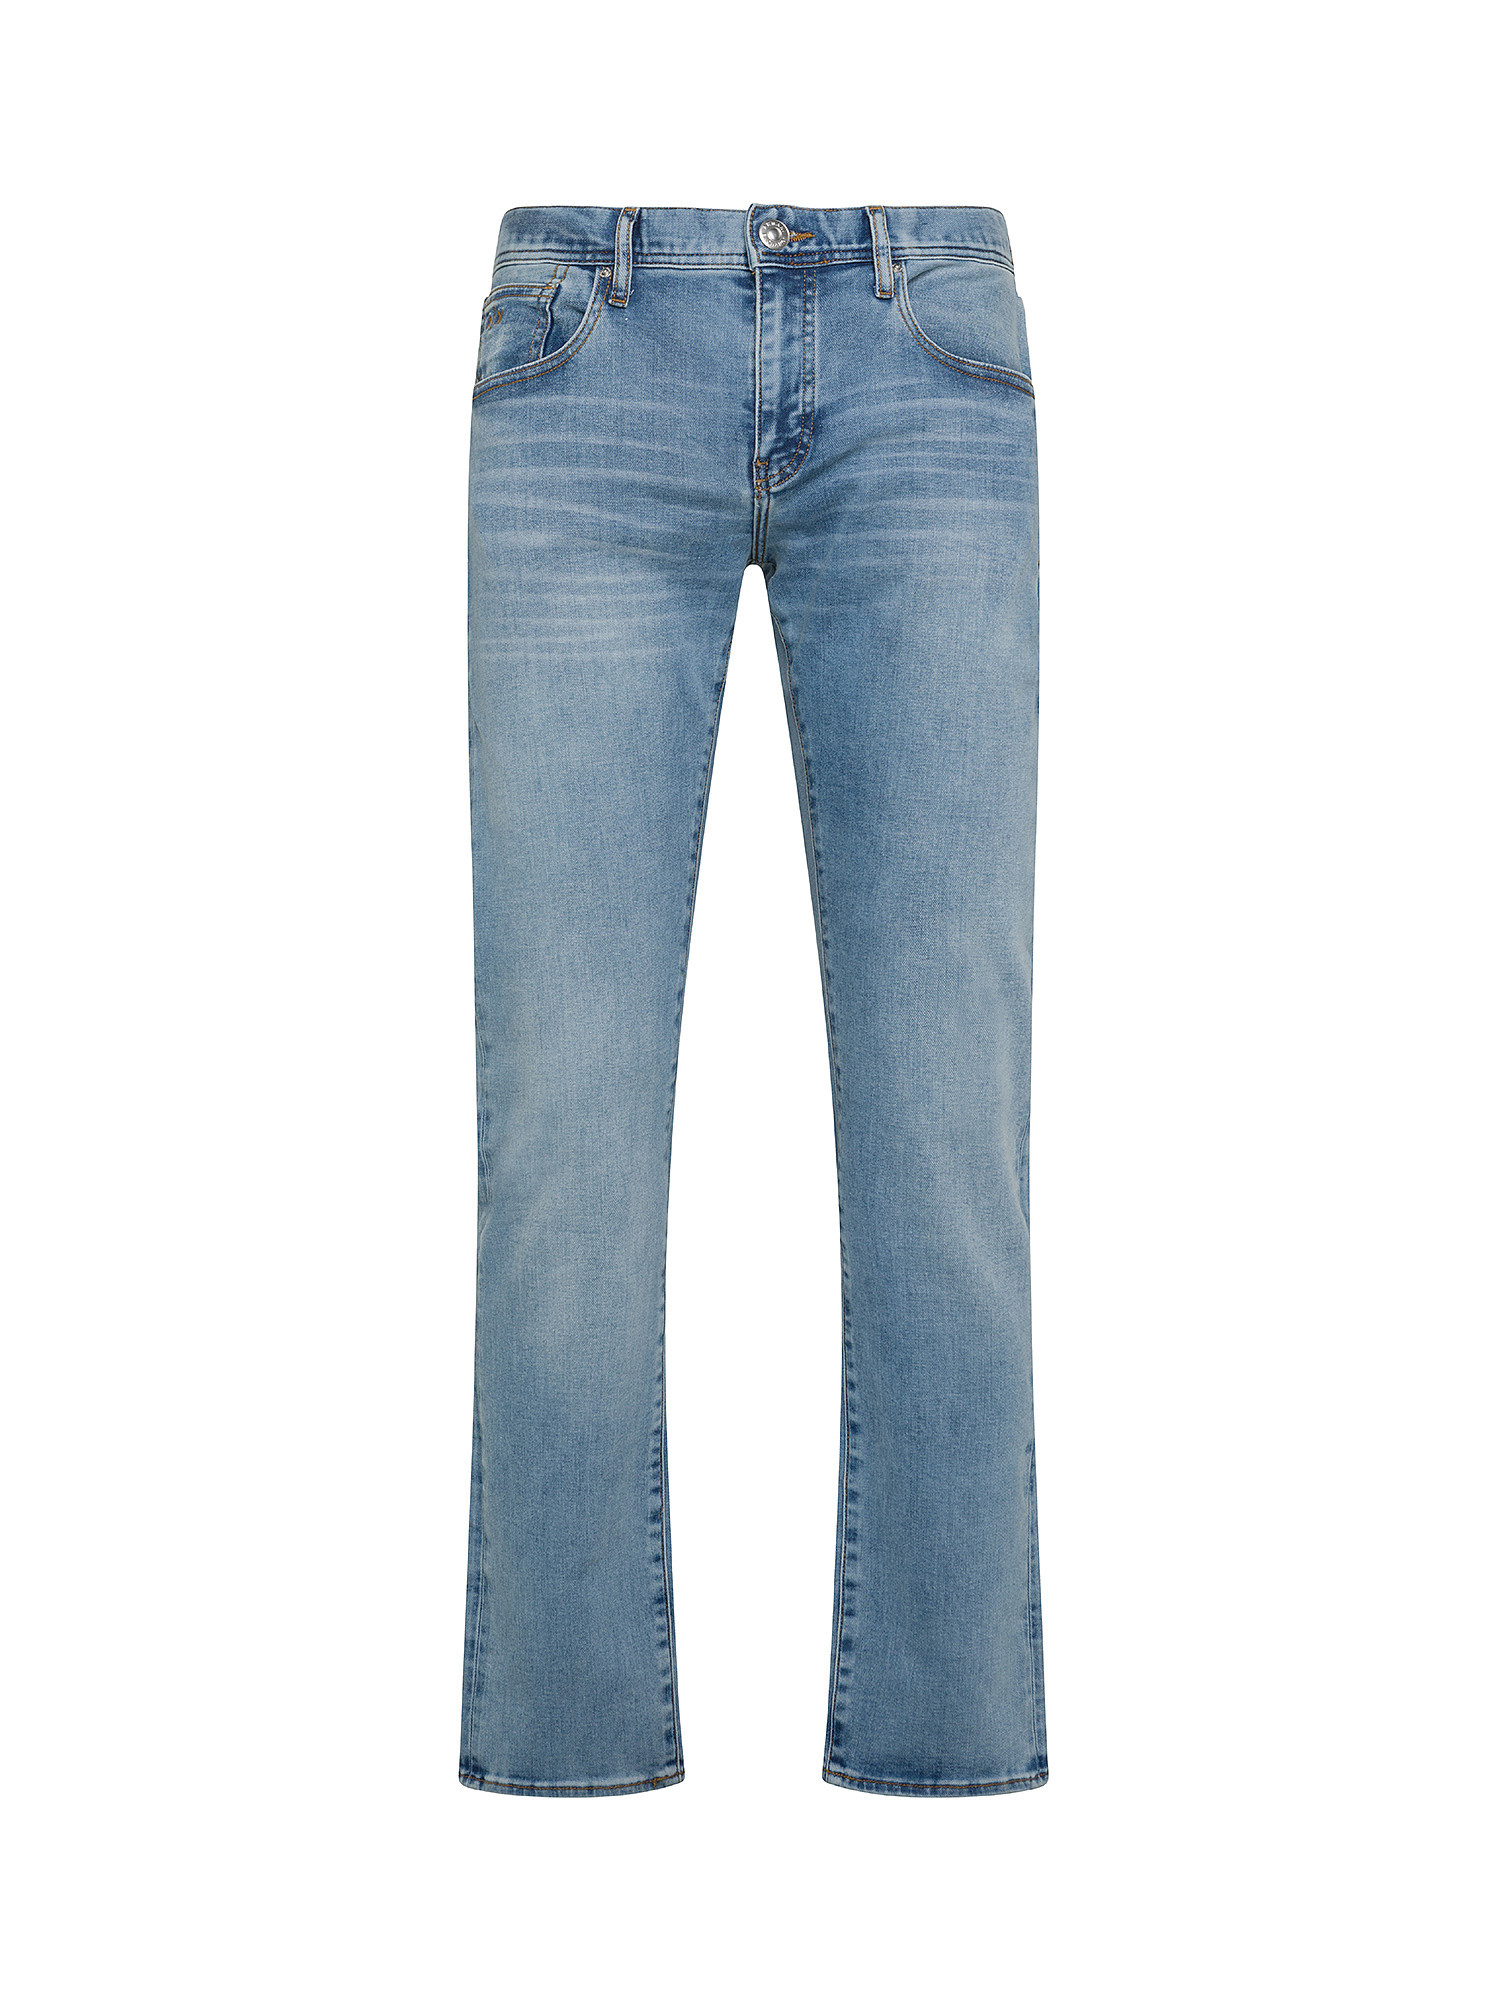 Armani Exchange - Jeans slim fit cinque tasche, Denim, large image number 0